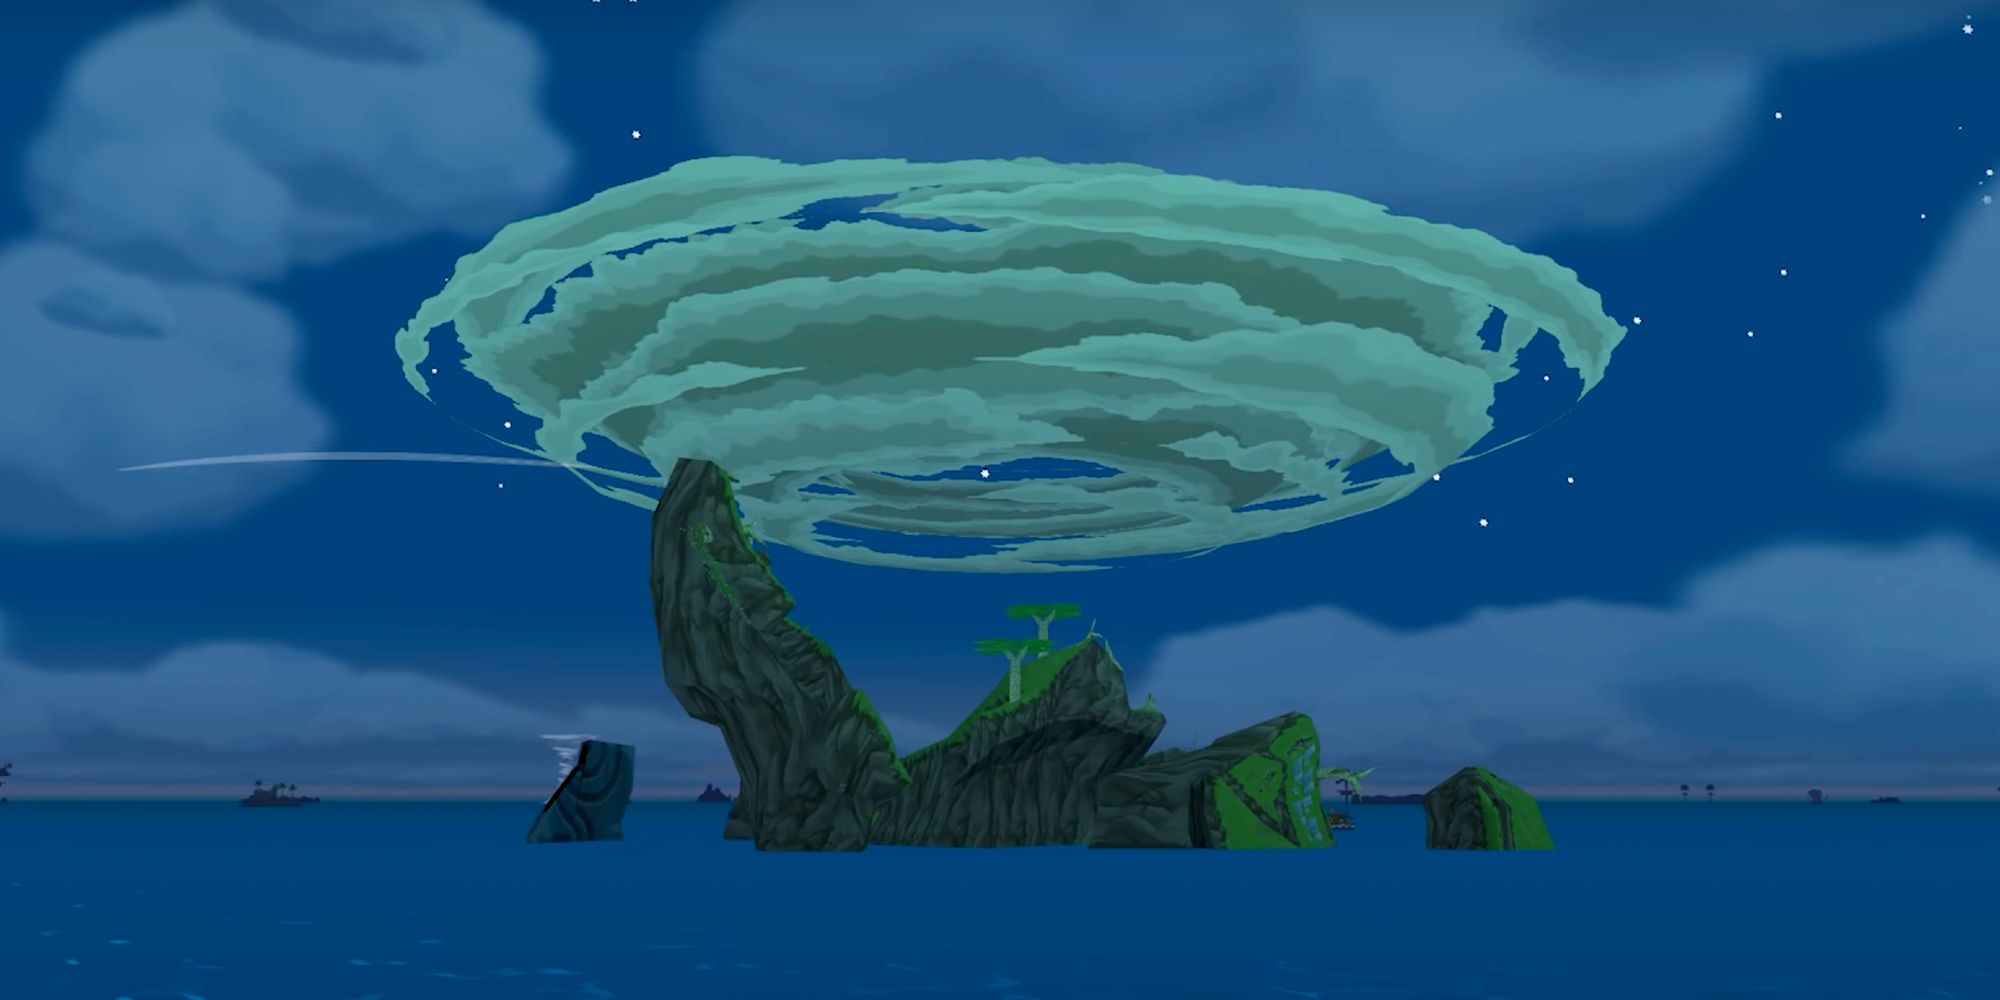 Zelda's Greatfish Isle: What Happened To Wind Waker's Ruined Island